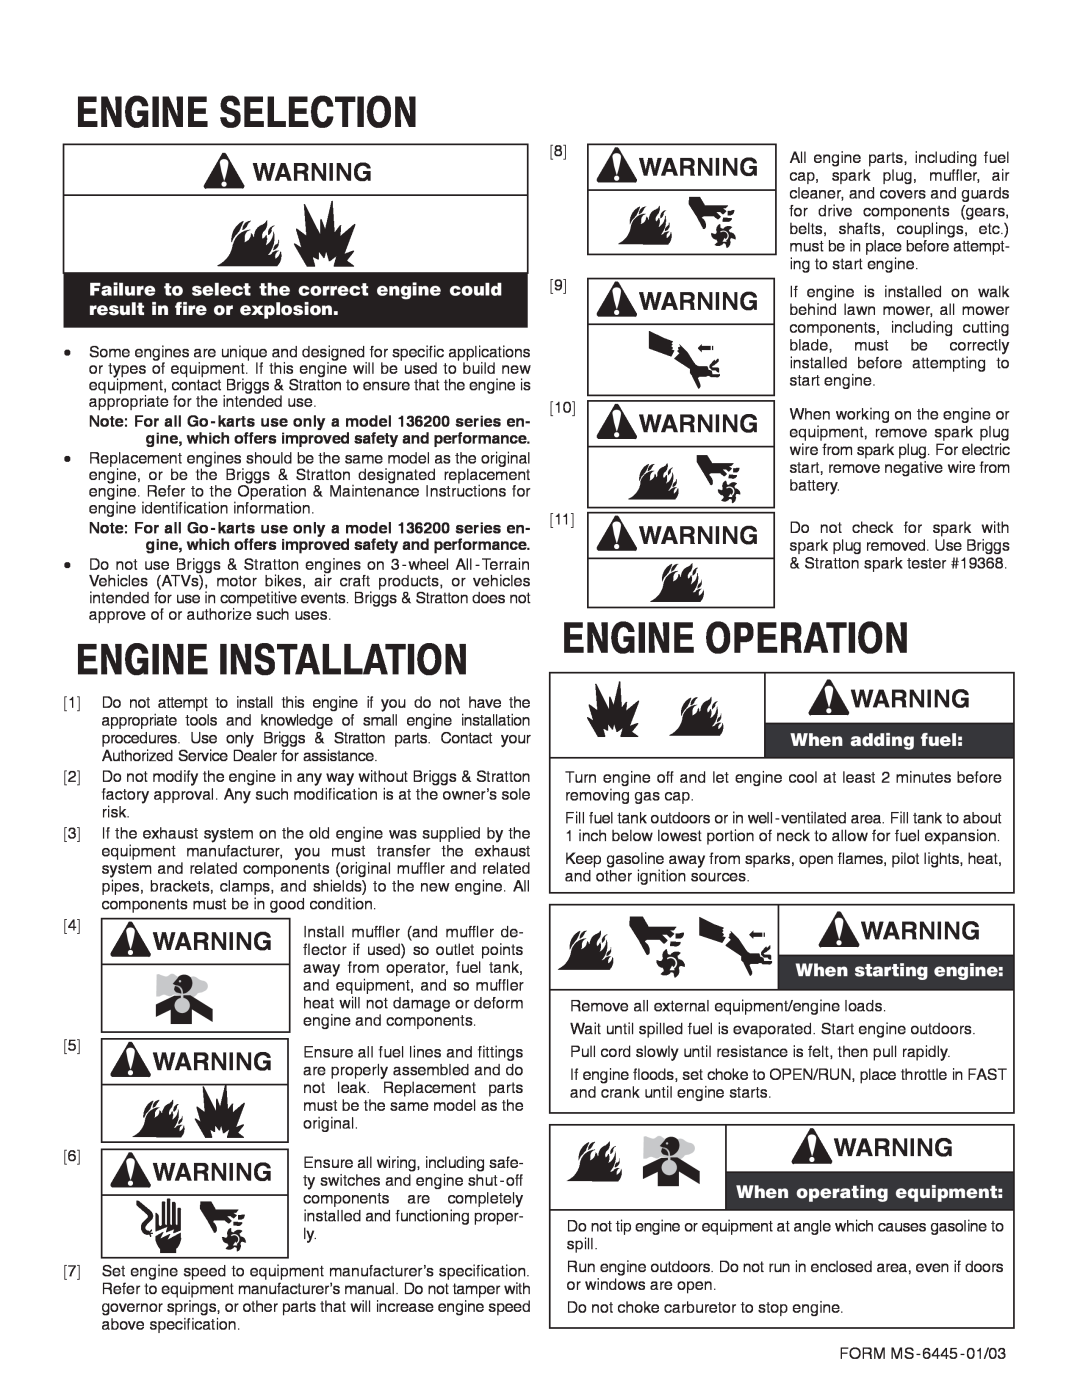 Briggs & Stratton 136200 Engine Selection, Engine Installation, Engine Operation, When adding fuel, When starting engine 